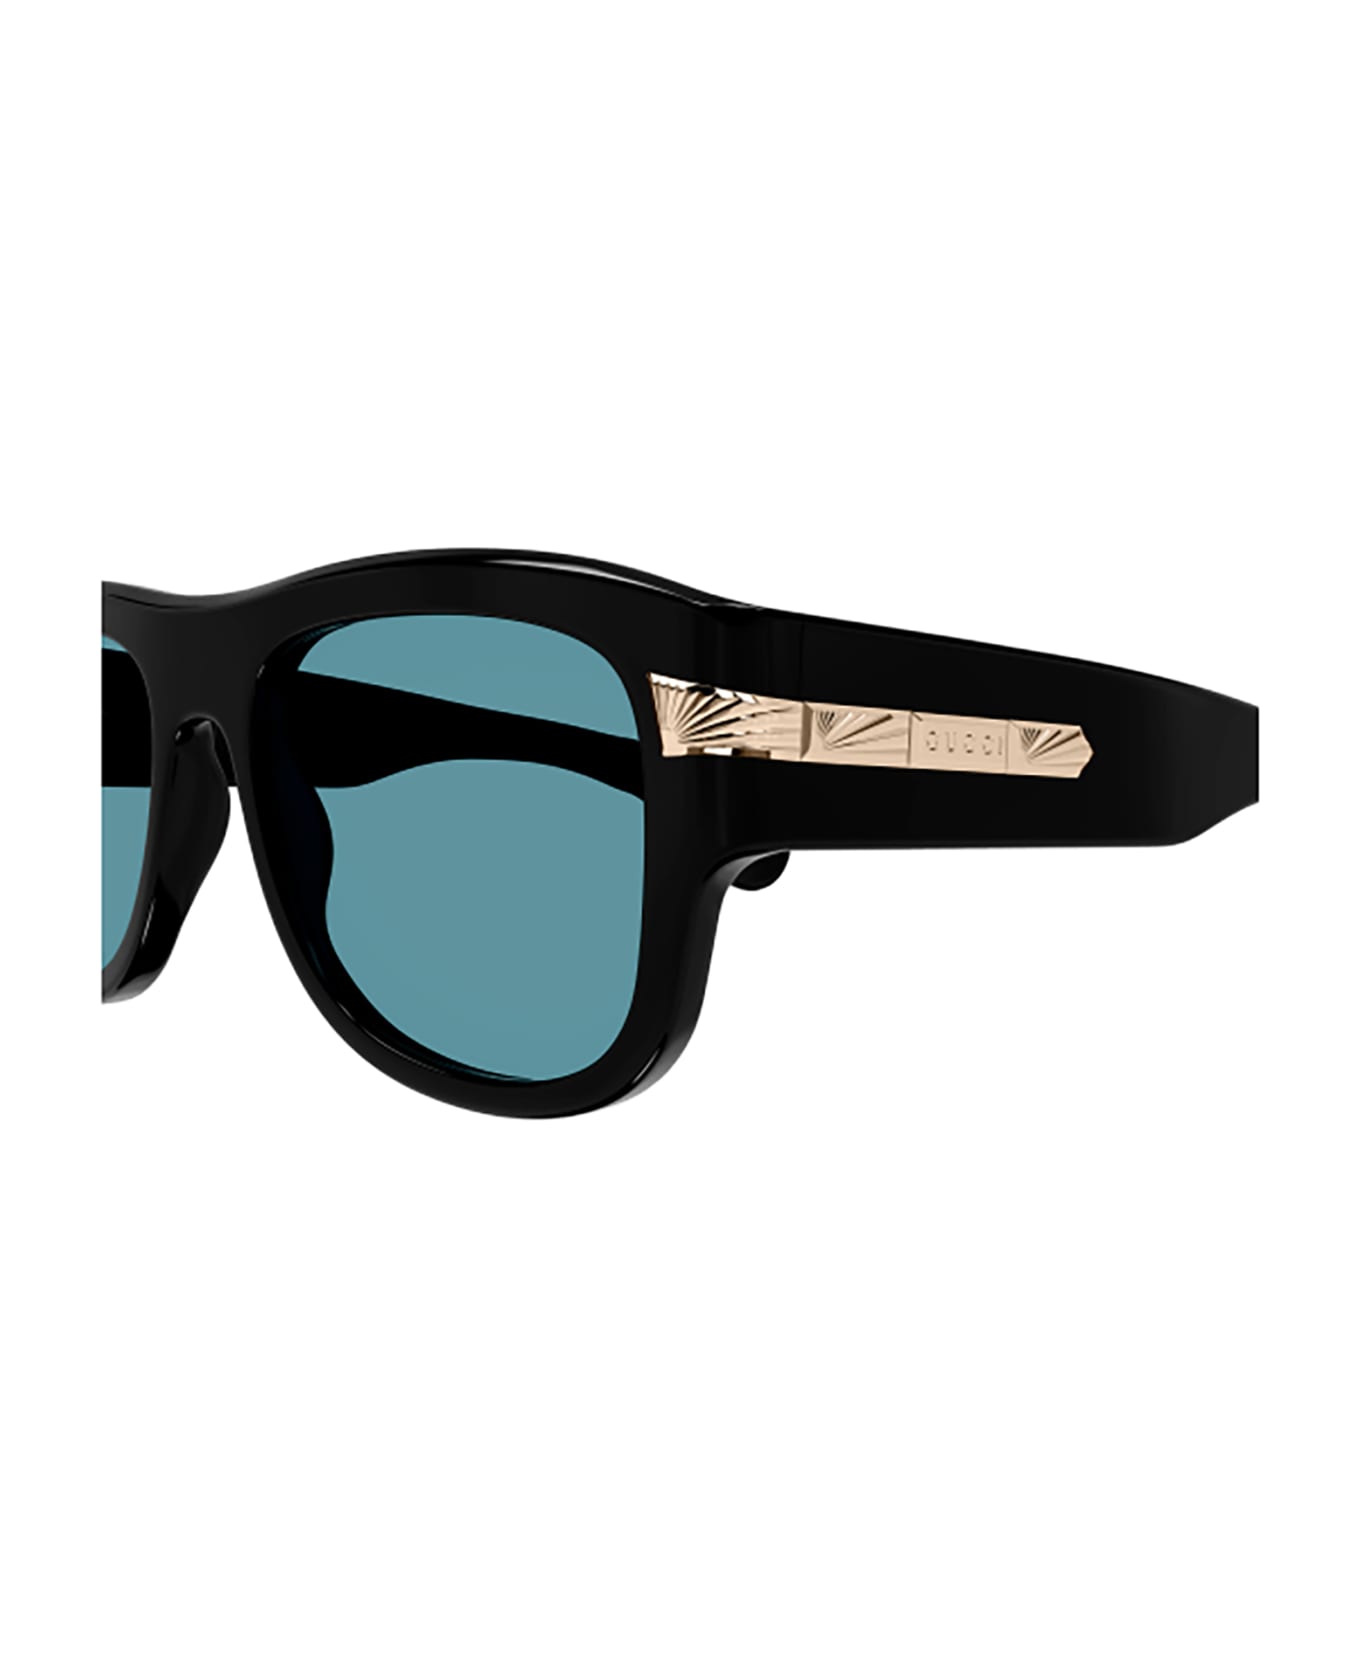 Gucci Eyewear GG1517S Sunglasses - Black Black Blue サングラス